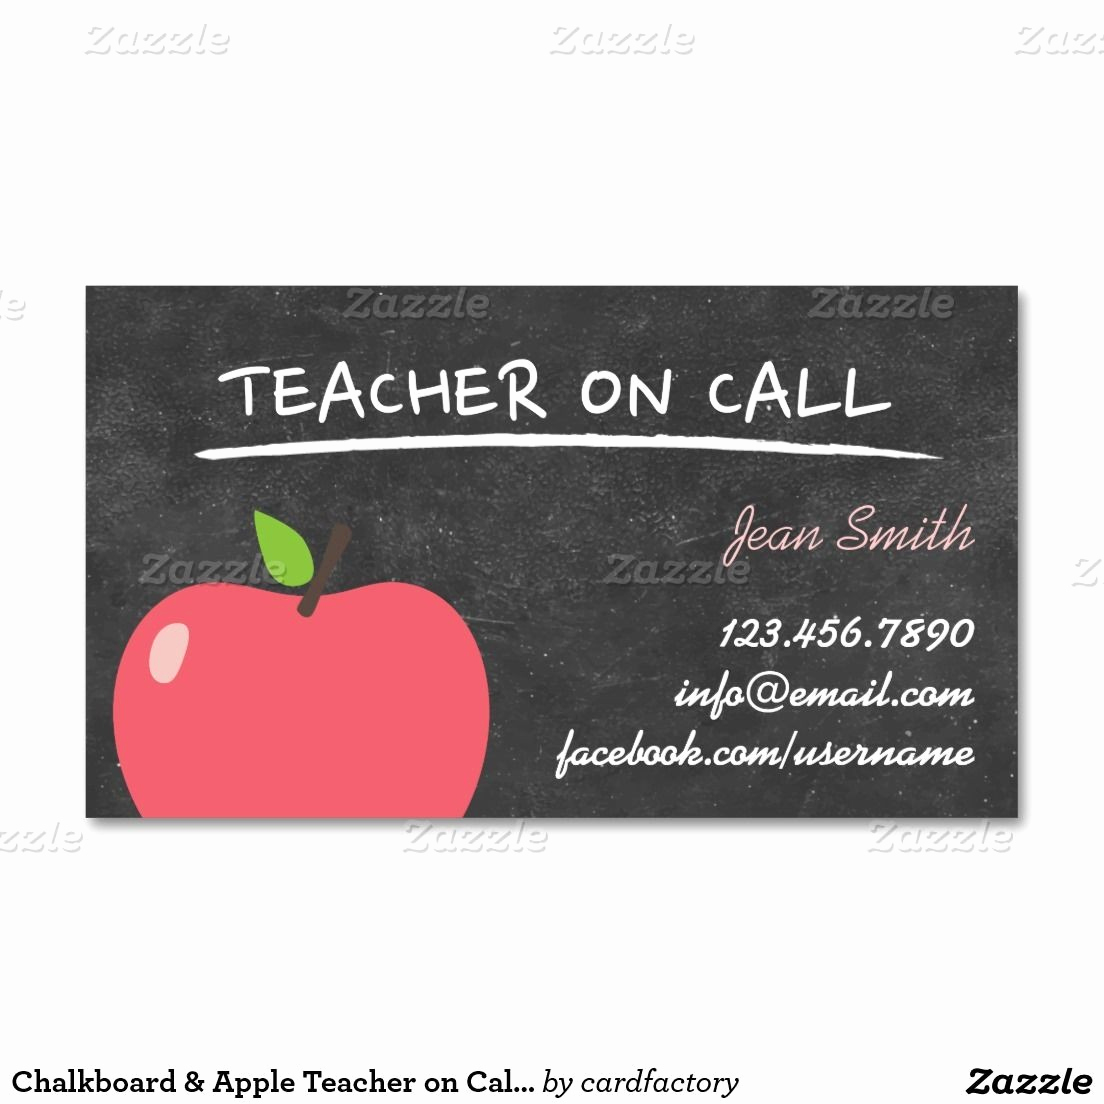 Teacher Business Cards Templates Free Throughout Business Cards For Teachers Templates Free